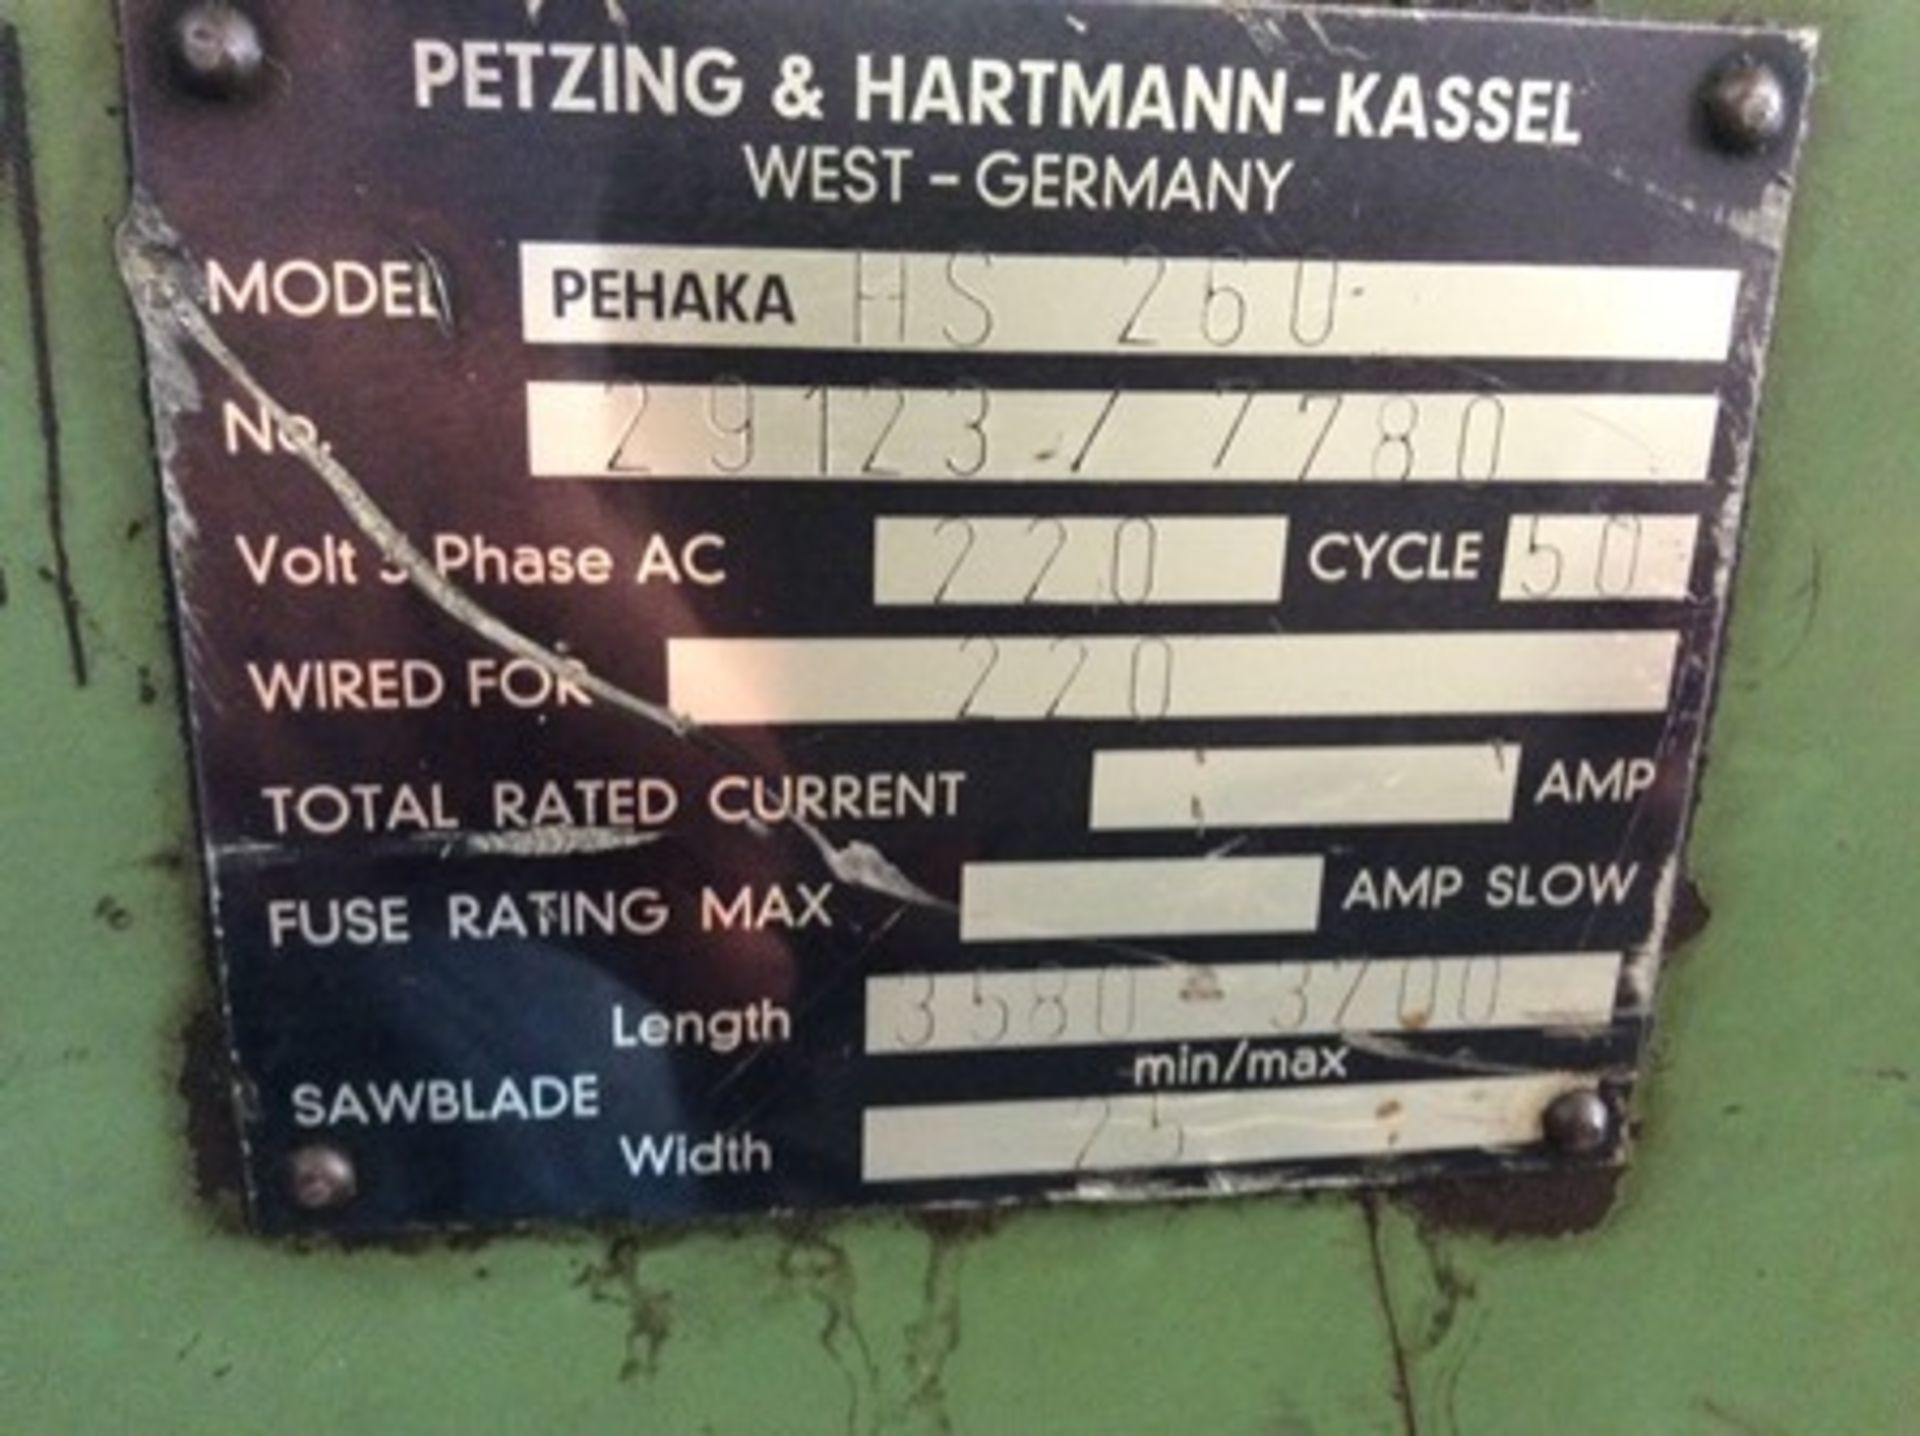 Sierra cinta marca Petzing & Hartmann-Kassel mod. Pehaka HS 260 serie 29123/7780, incluye rollo de - Image 6 of 12